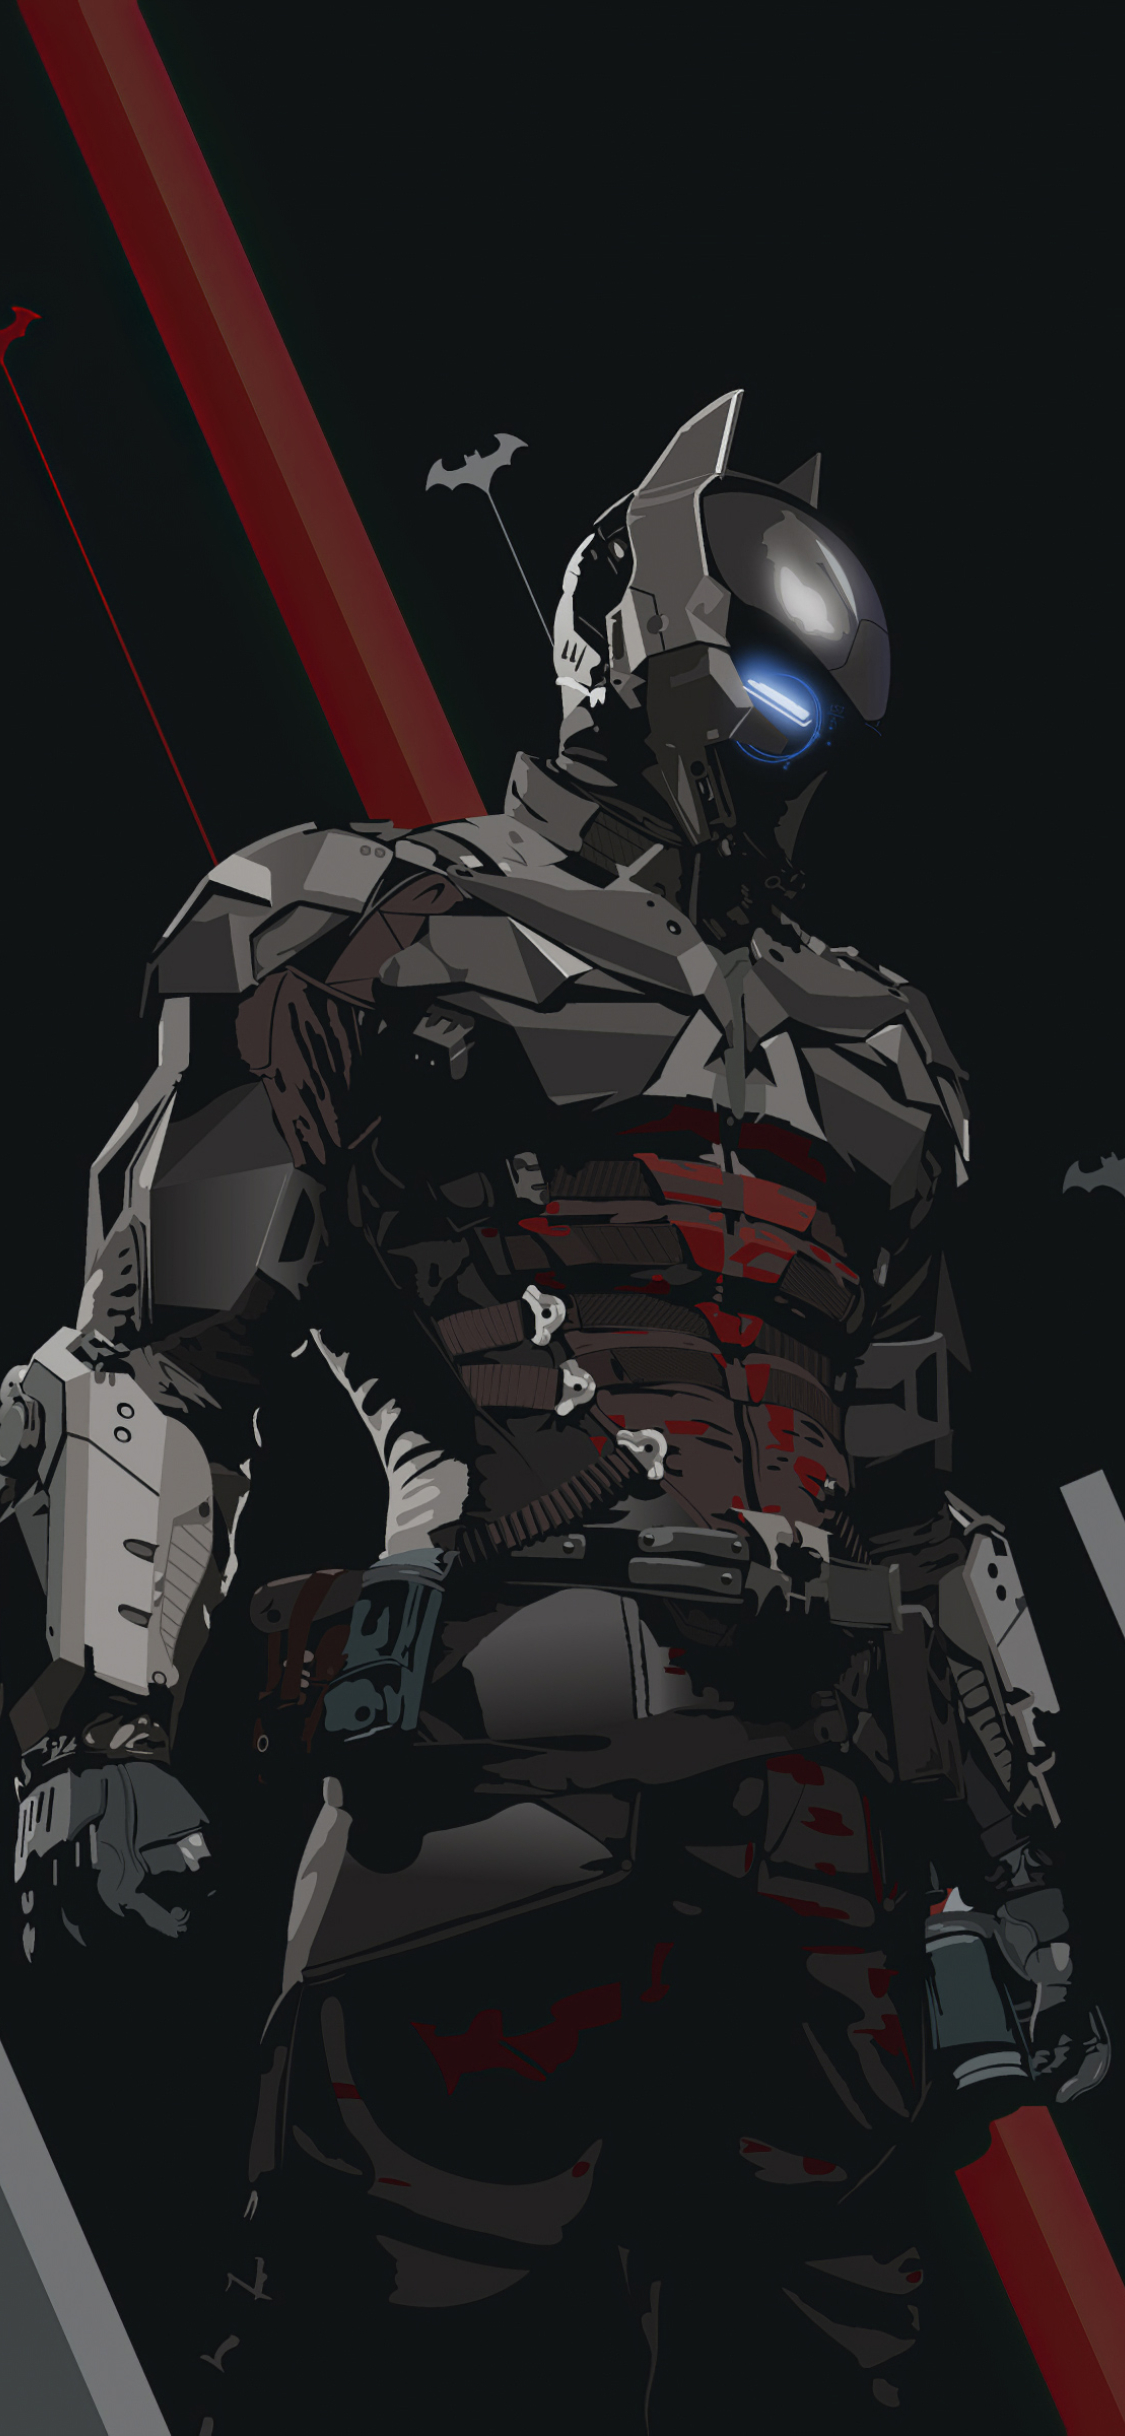 49+] Batman Arkham Knight 4K Wallpaper - WallpaperSafari